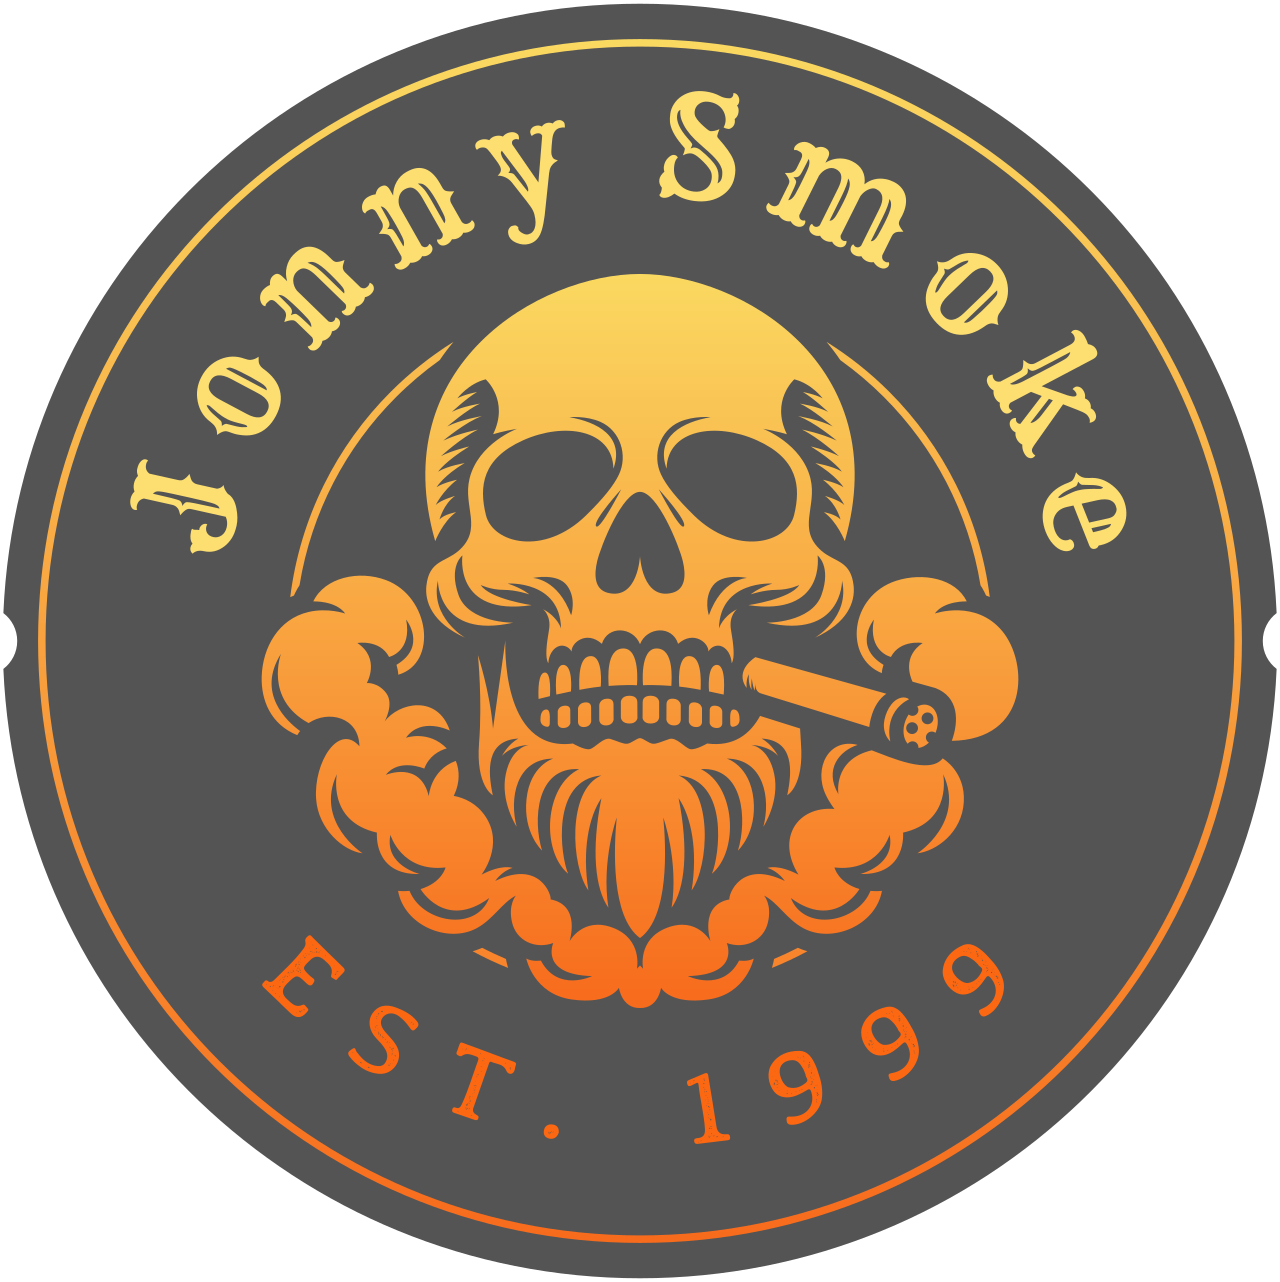 Jonny Smoke's logo